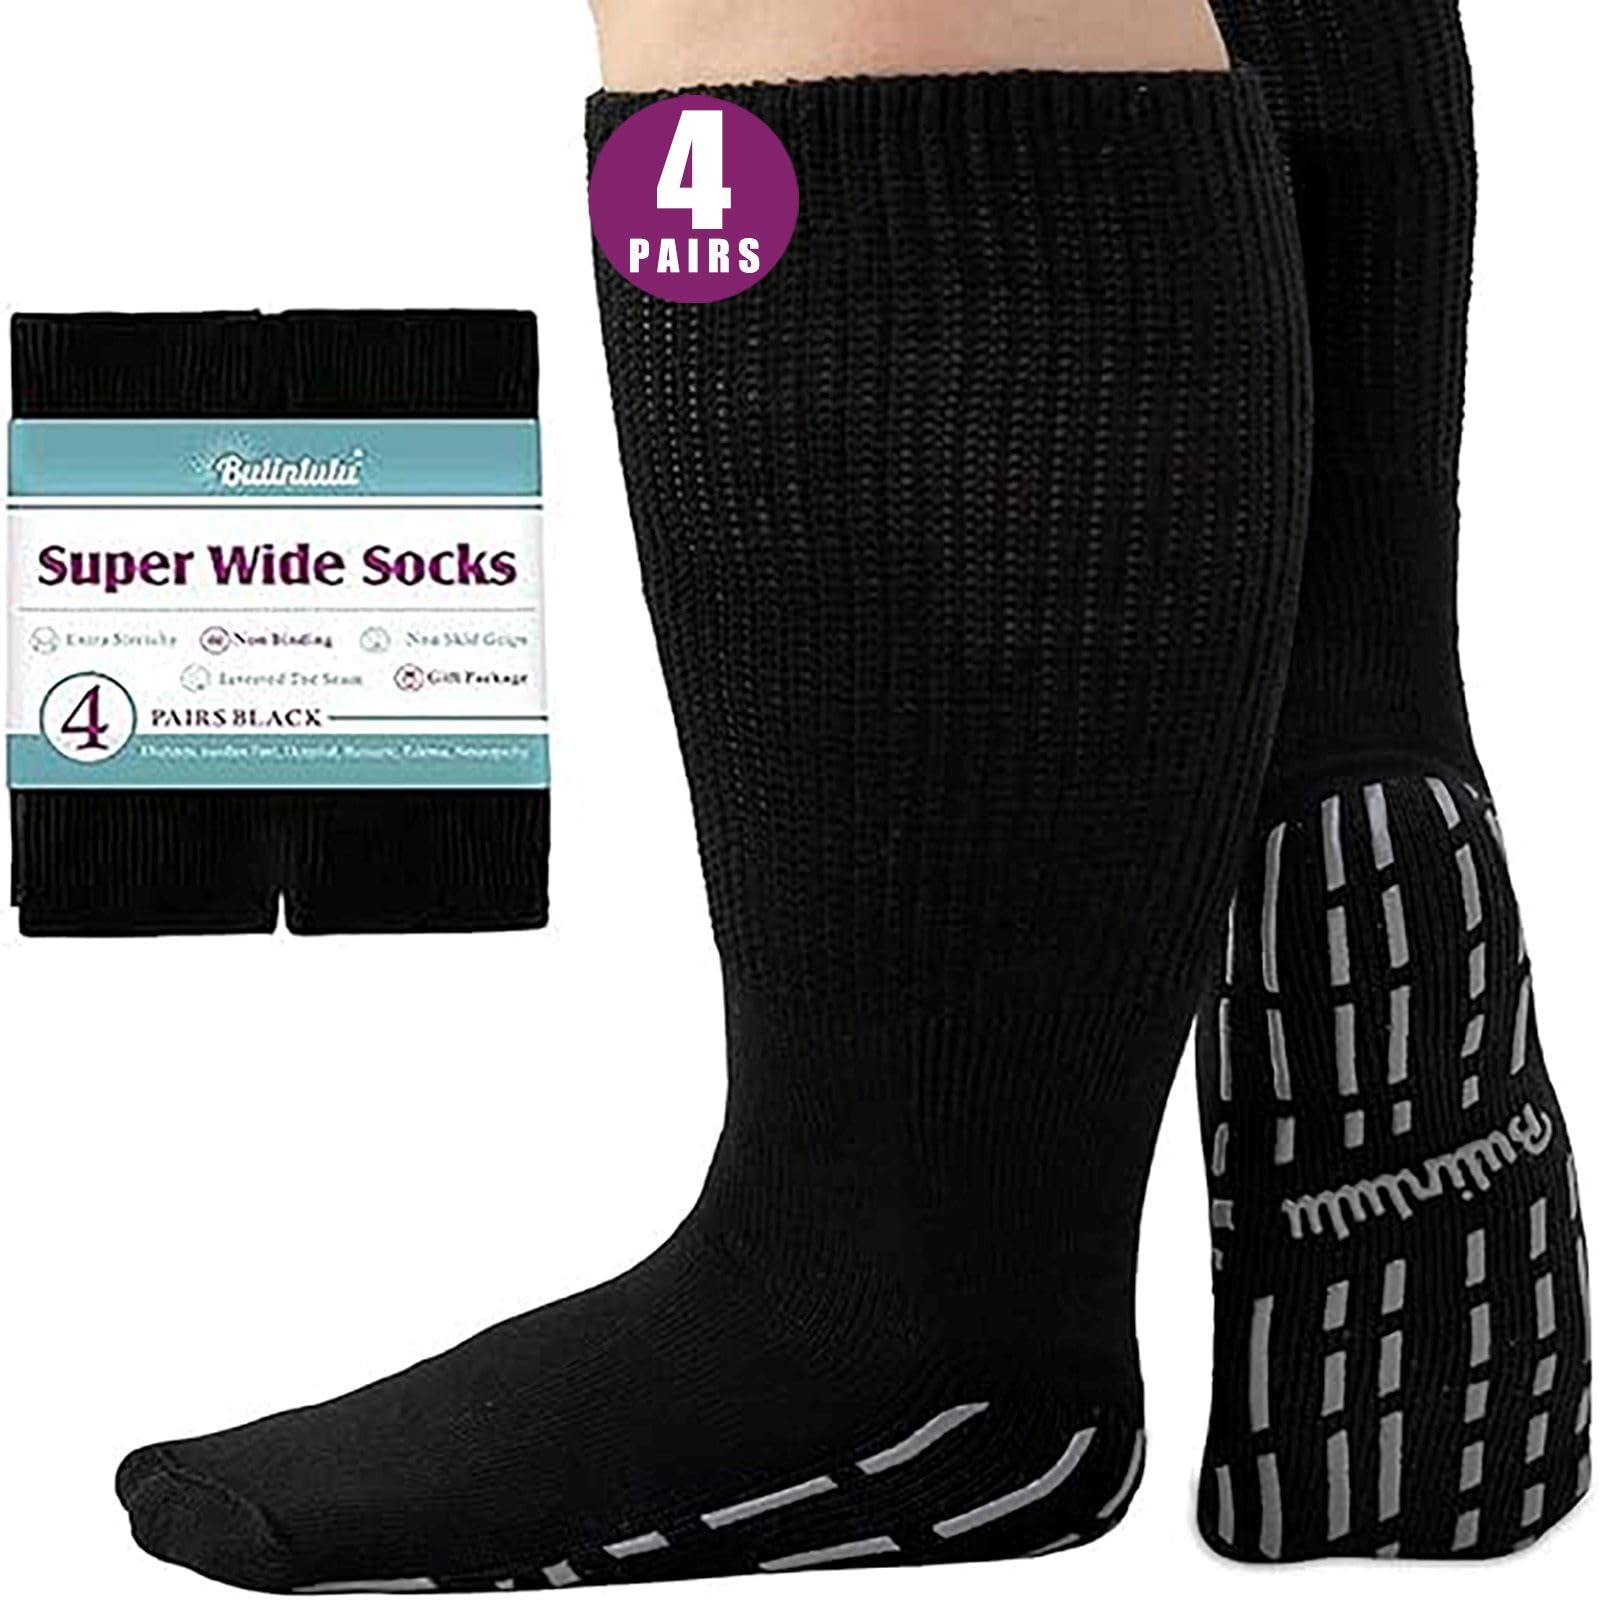 Bulinlulu Extra Width Socks for Swollen Feet-4 Pairs Hospital Grip Socks,Bariatric Socks,Diabetic Socks for Women Men 13-15,Lymphedema Socks-4 Black